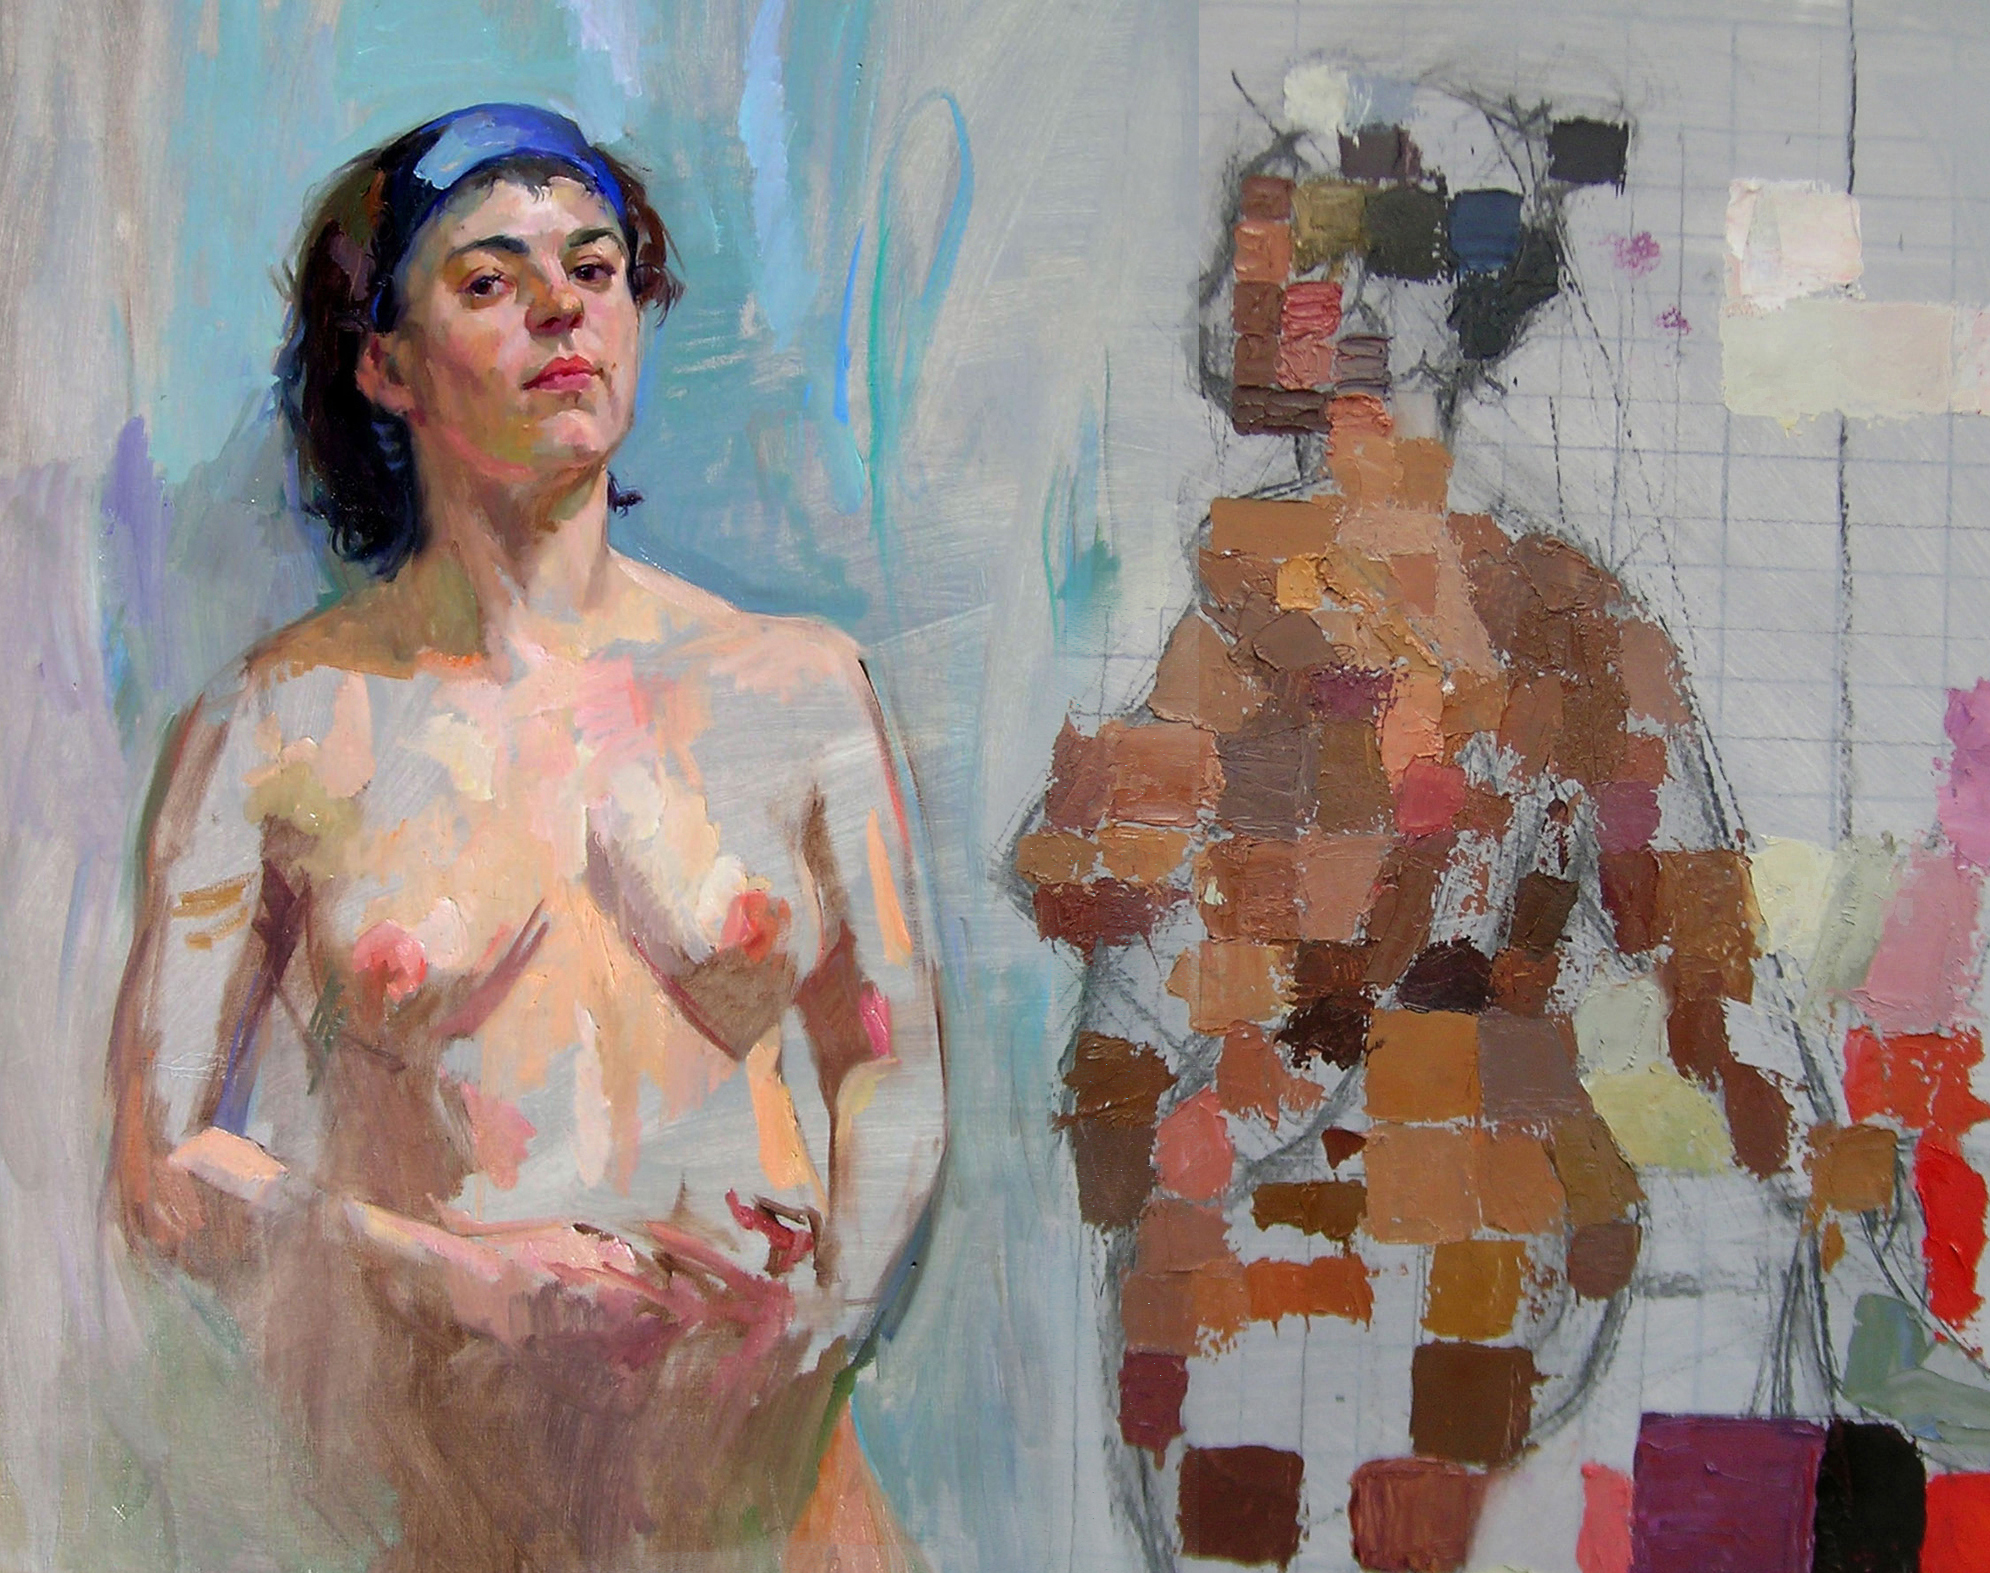 Samuel Adoquei, painting demonstration of skin tones in figurative art